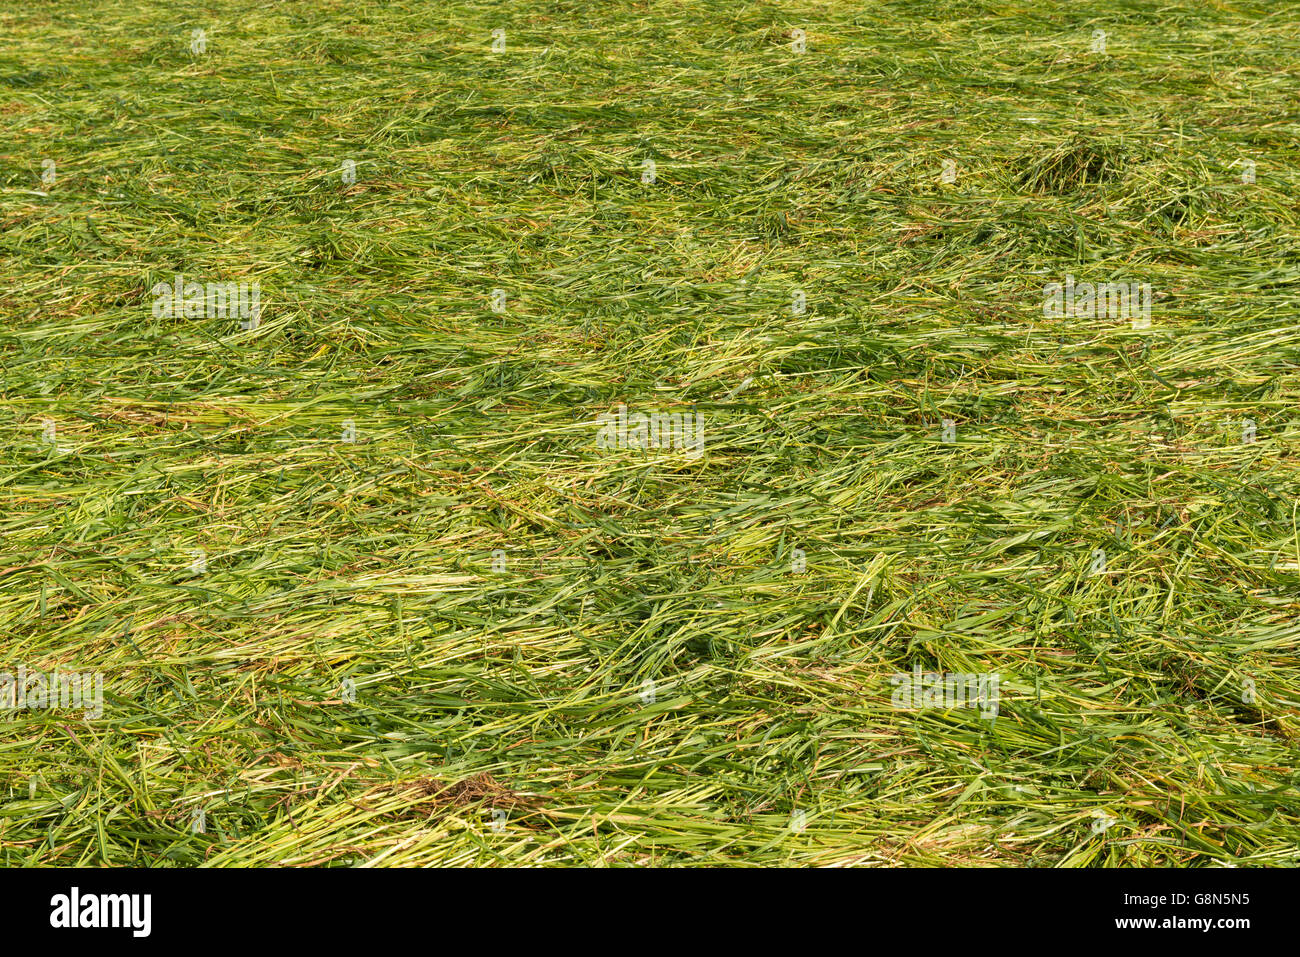 Appena falciata foraggi prati, prati con erba scythed per essiccazione, Hesse, Germania Foto Stock